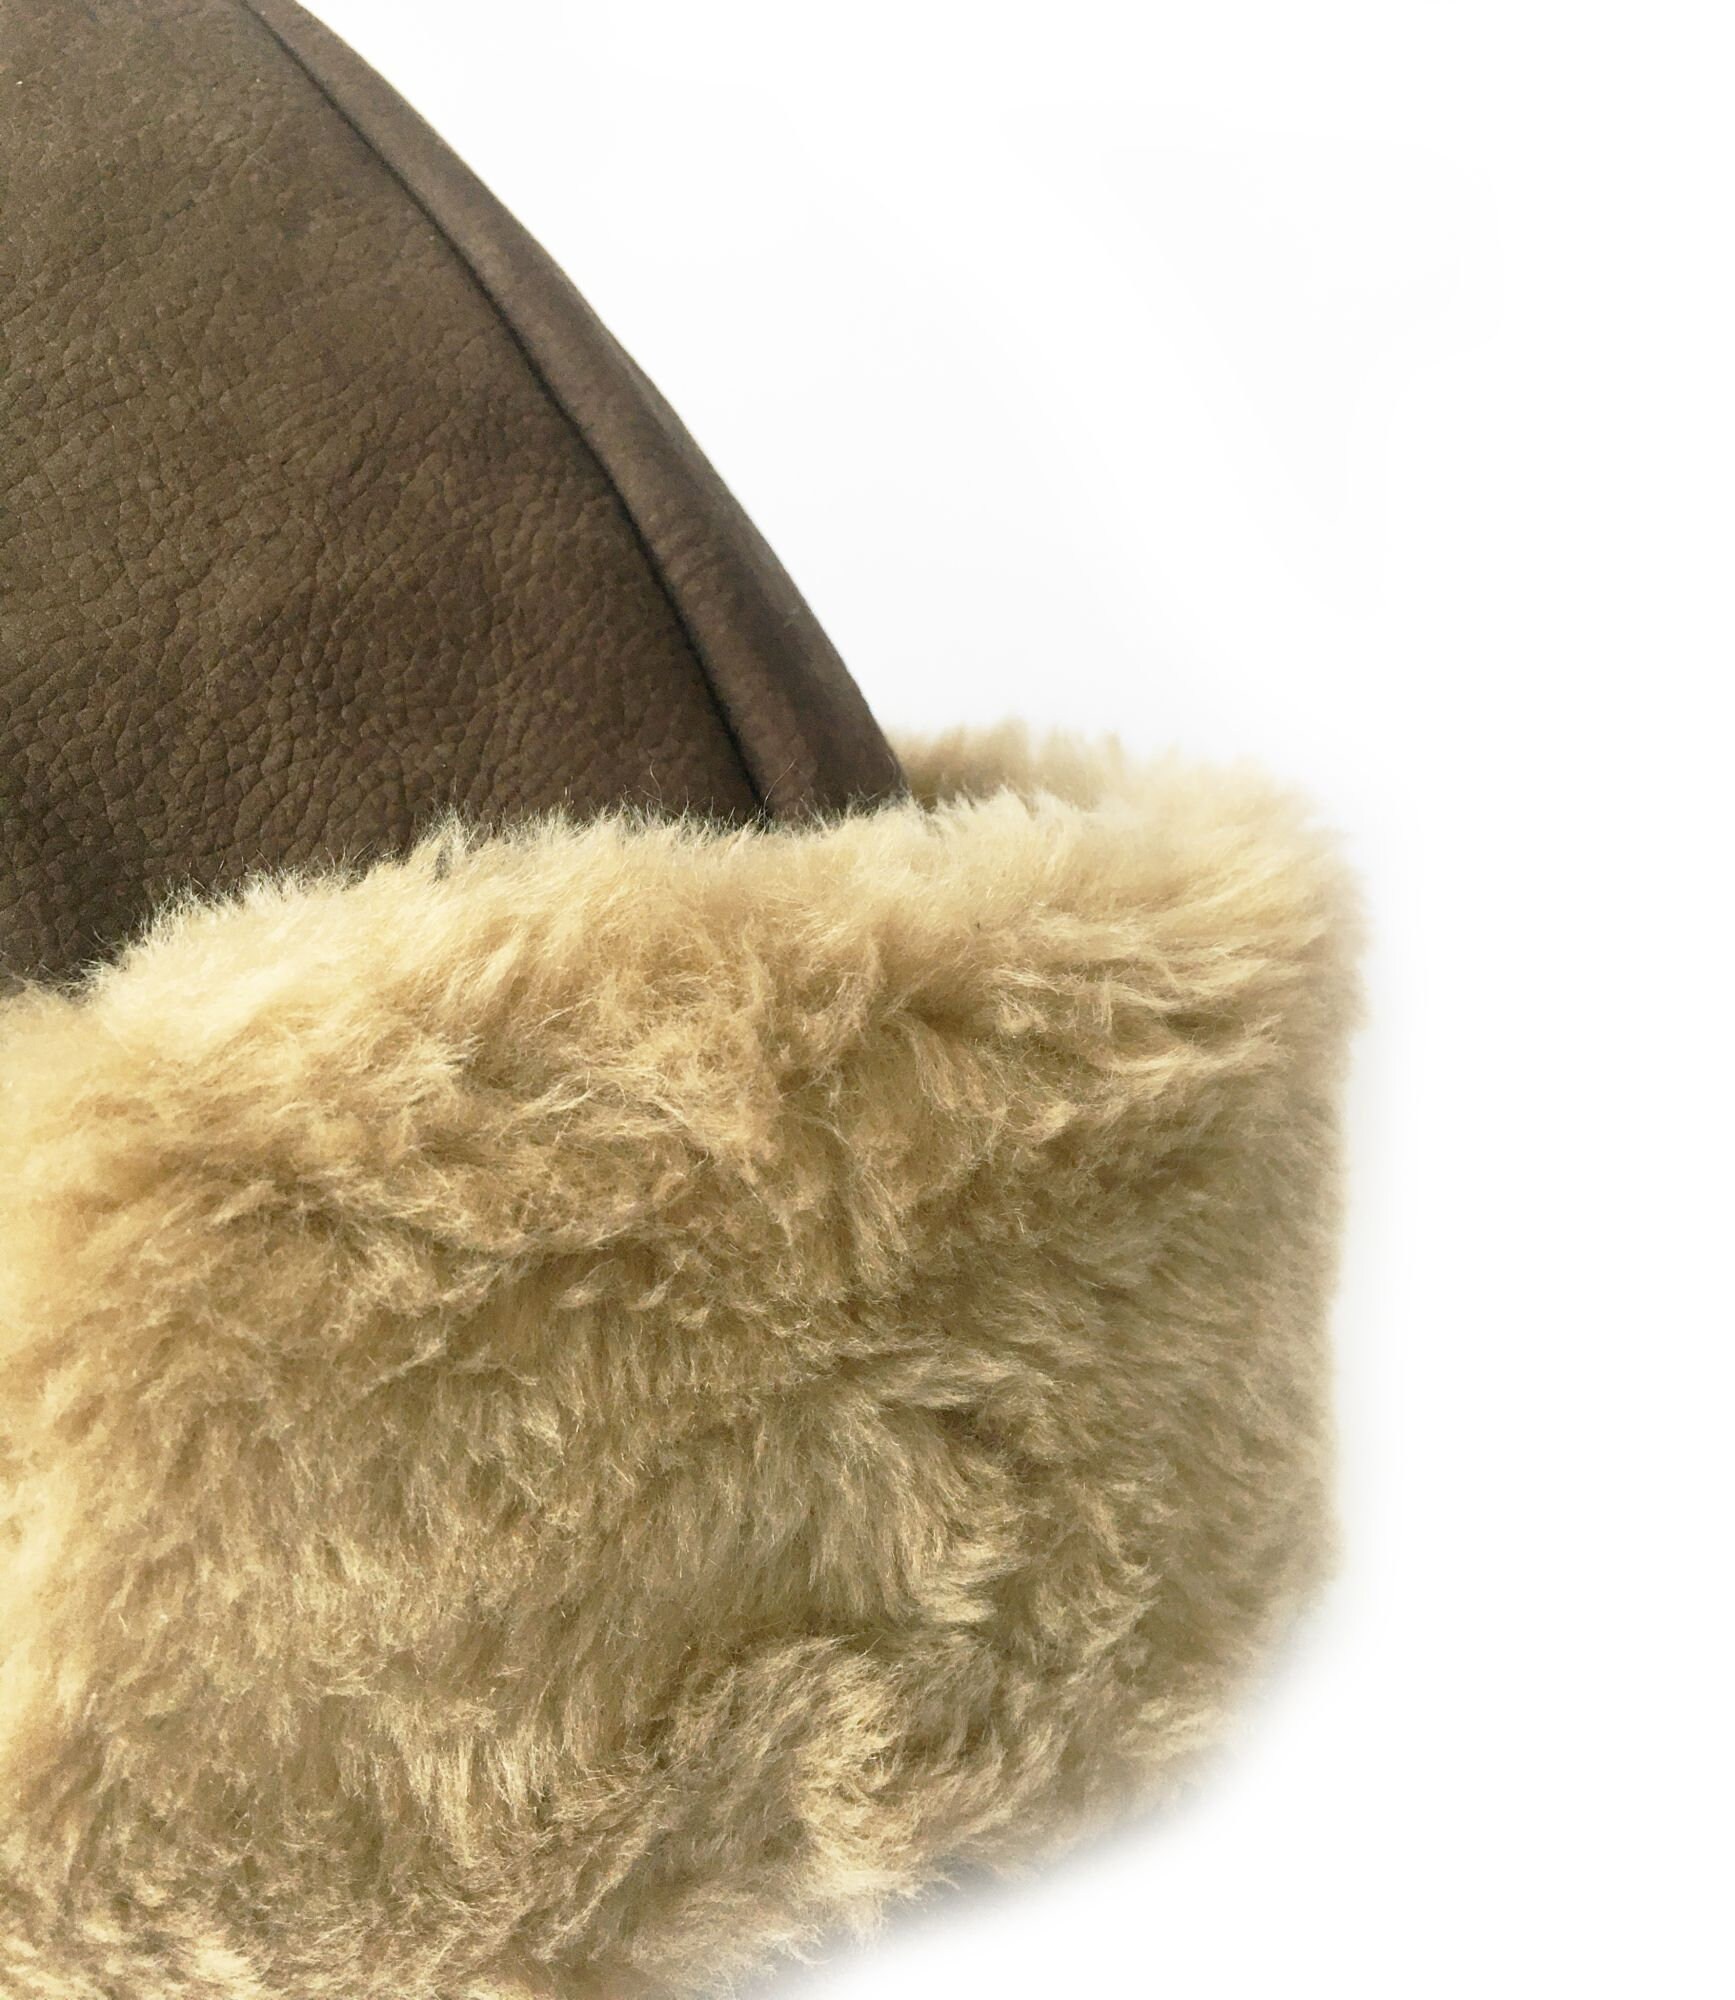 Traditional Ertugrul Gazi Börk Hat Nubuck Leather Light Brown With ...